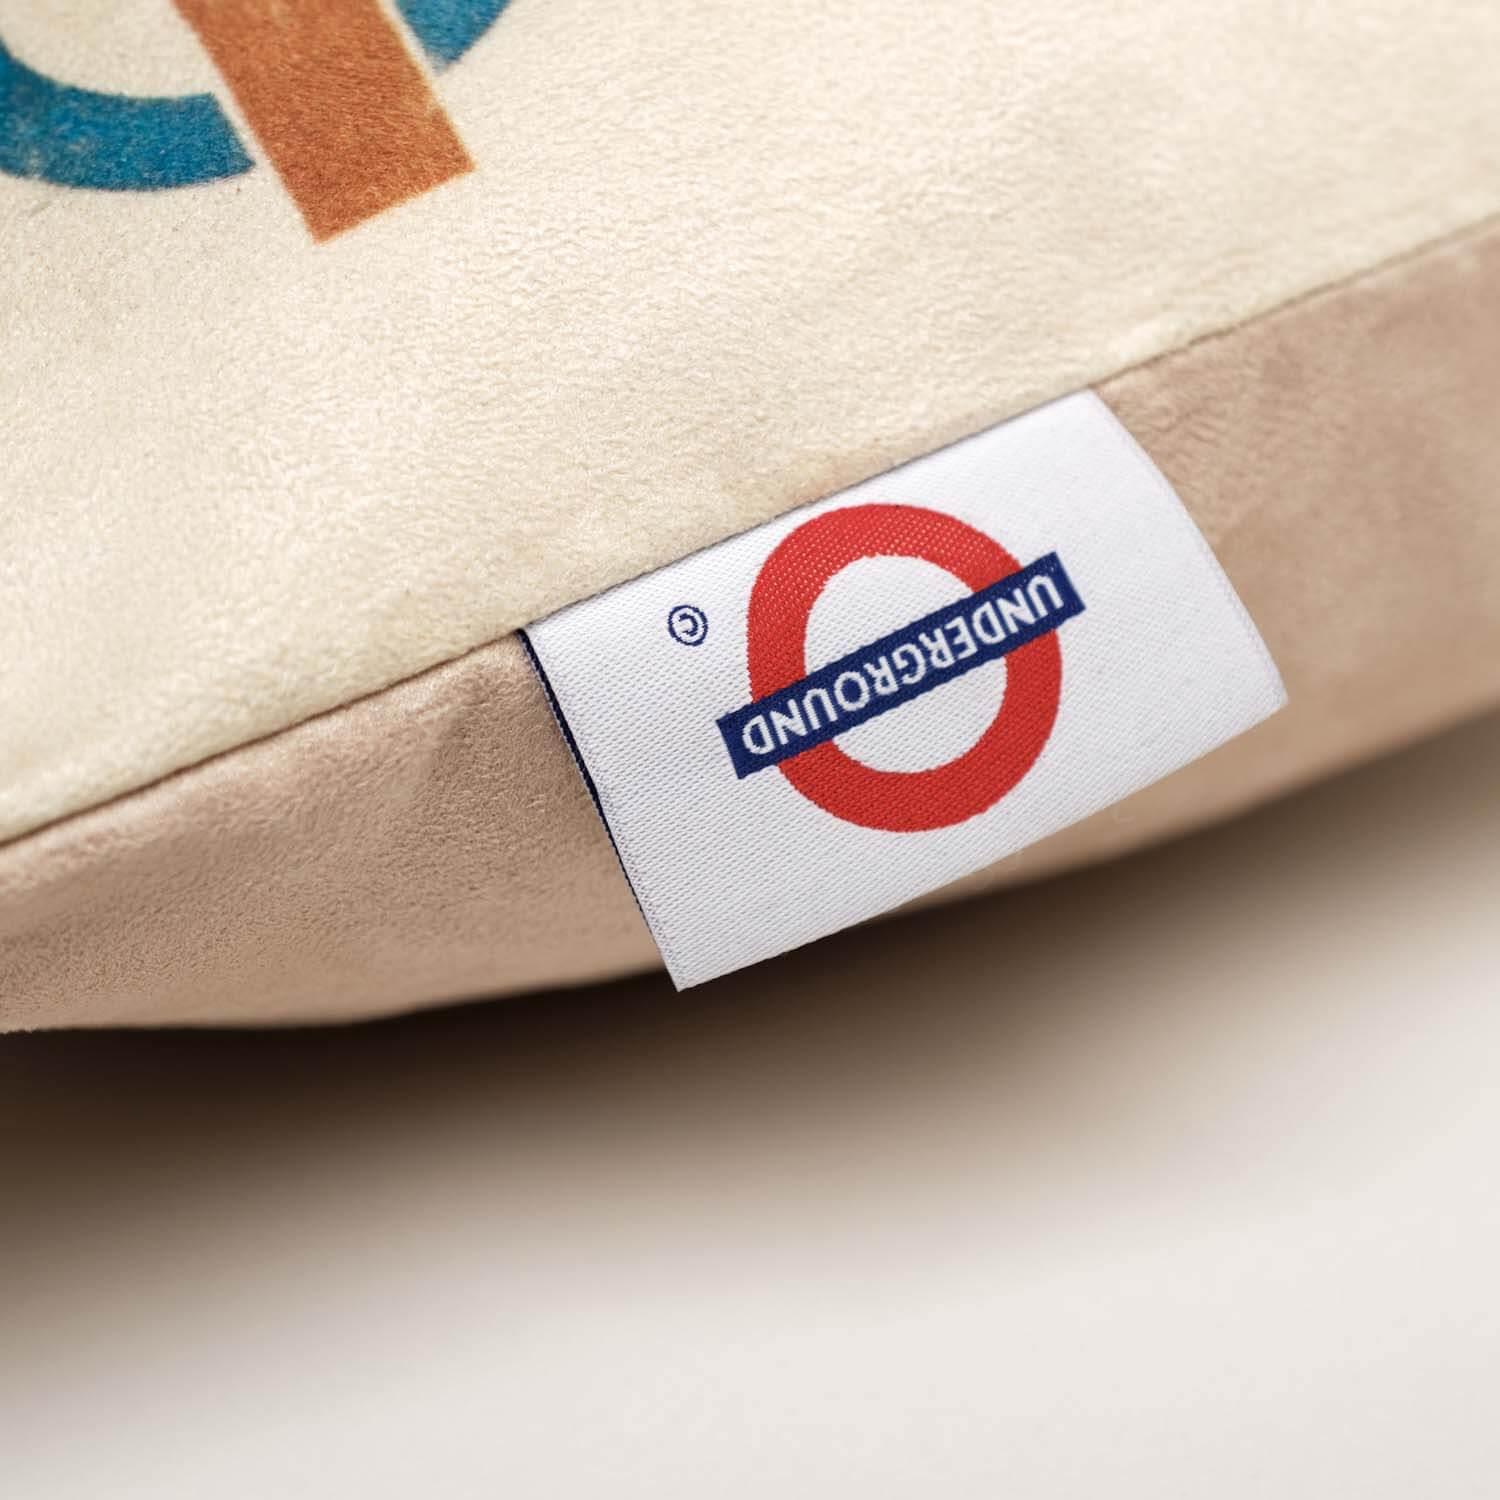 Brightest London - London Transport Cushion - Handmade Cushions UK - WeLoveCushions